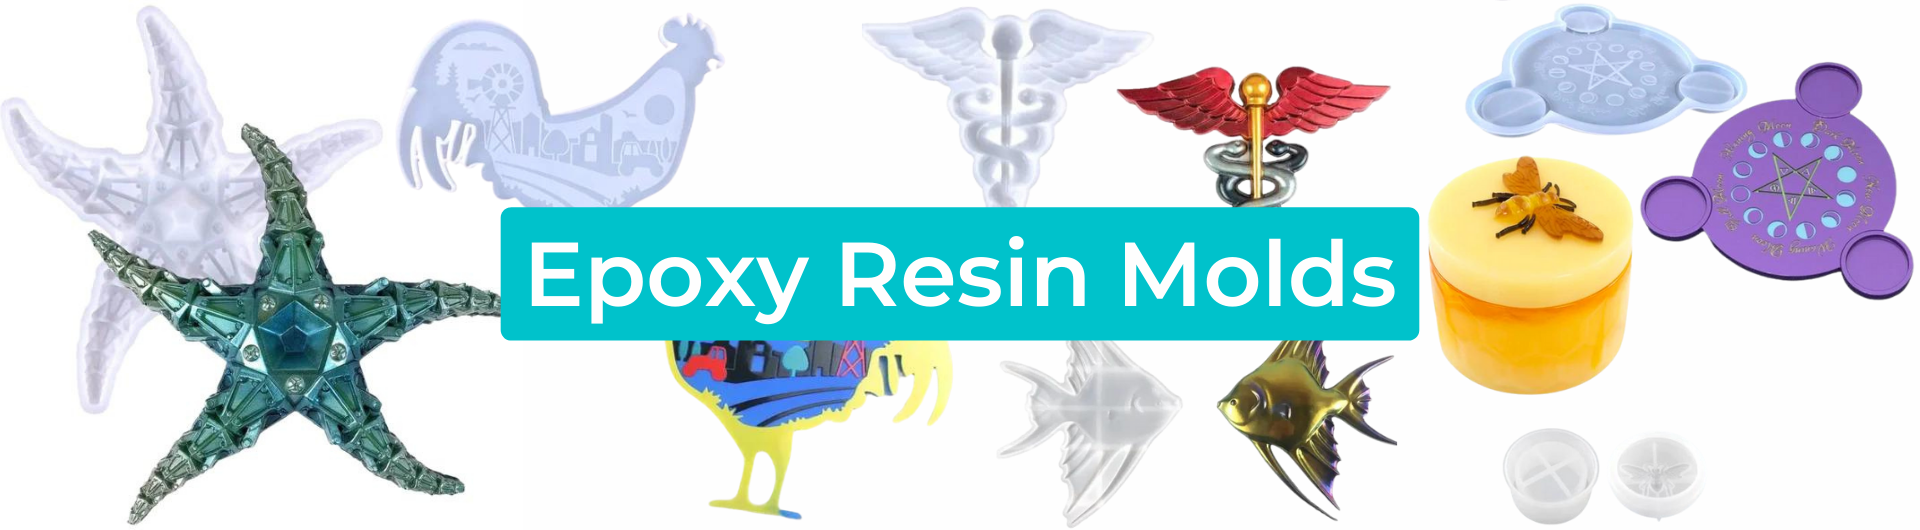 Epoxy Resin Molds